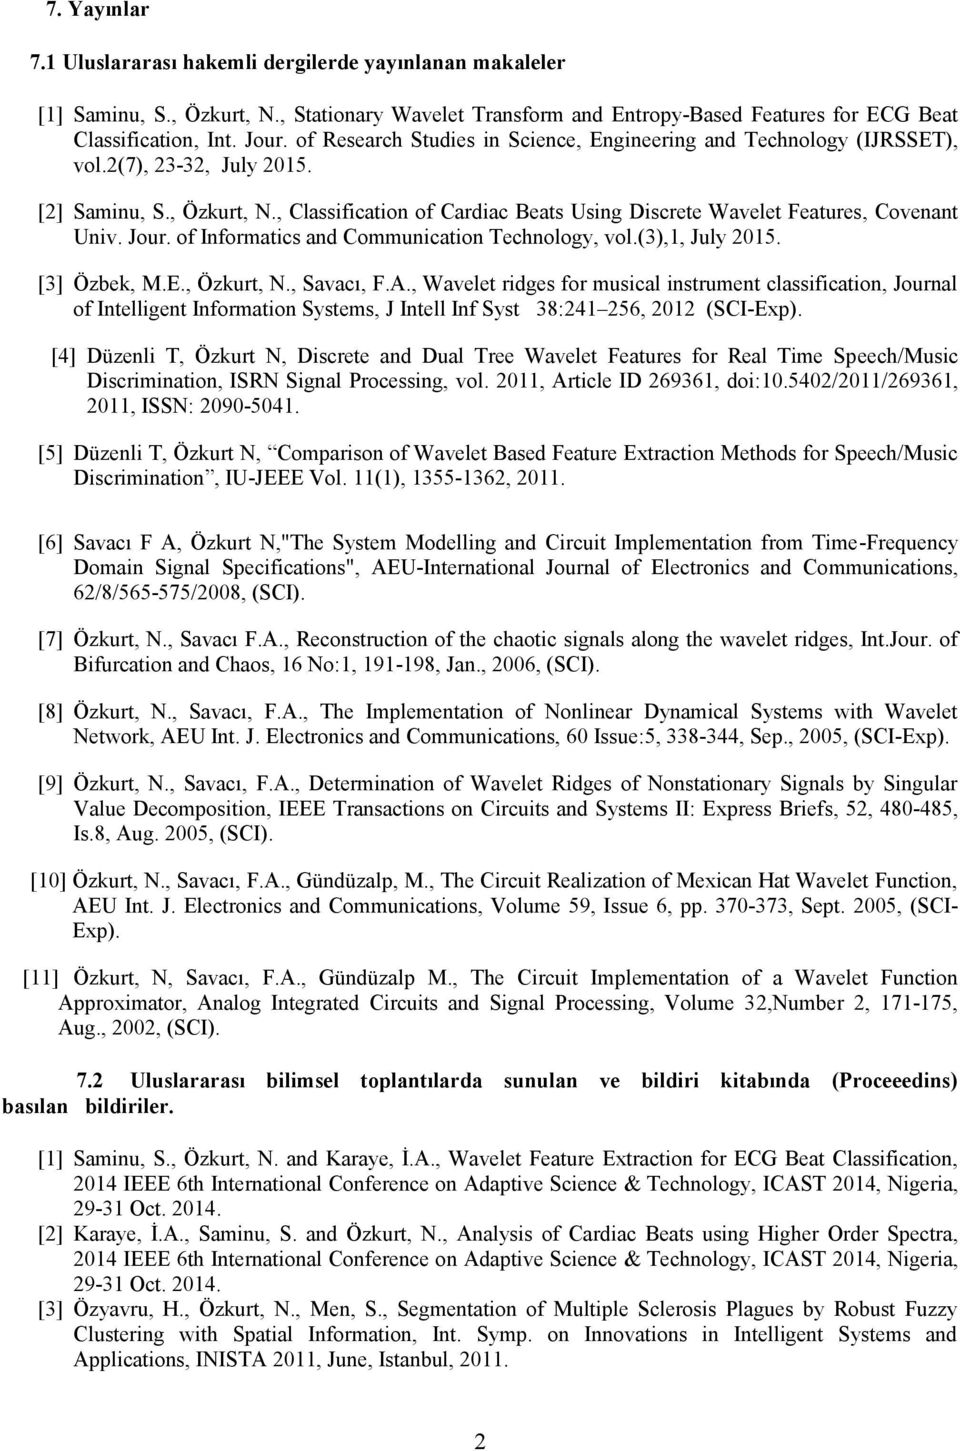 , Classification of Cardiac Beats Using Discrete Wavelet Features, Covenant Univ. Jour. of Informatics and Communication Technology, vol.(3),1, July 2015. [3] Özbek, M.E., Özkurt, N., Savacı, F.A.